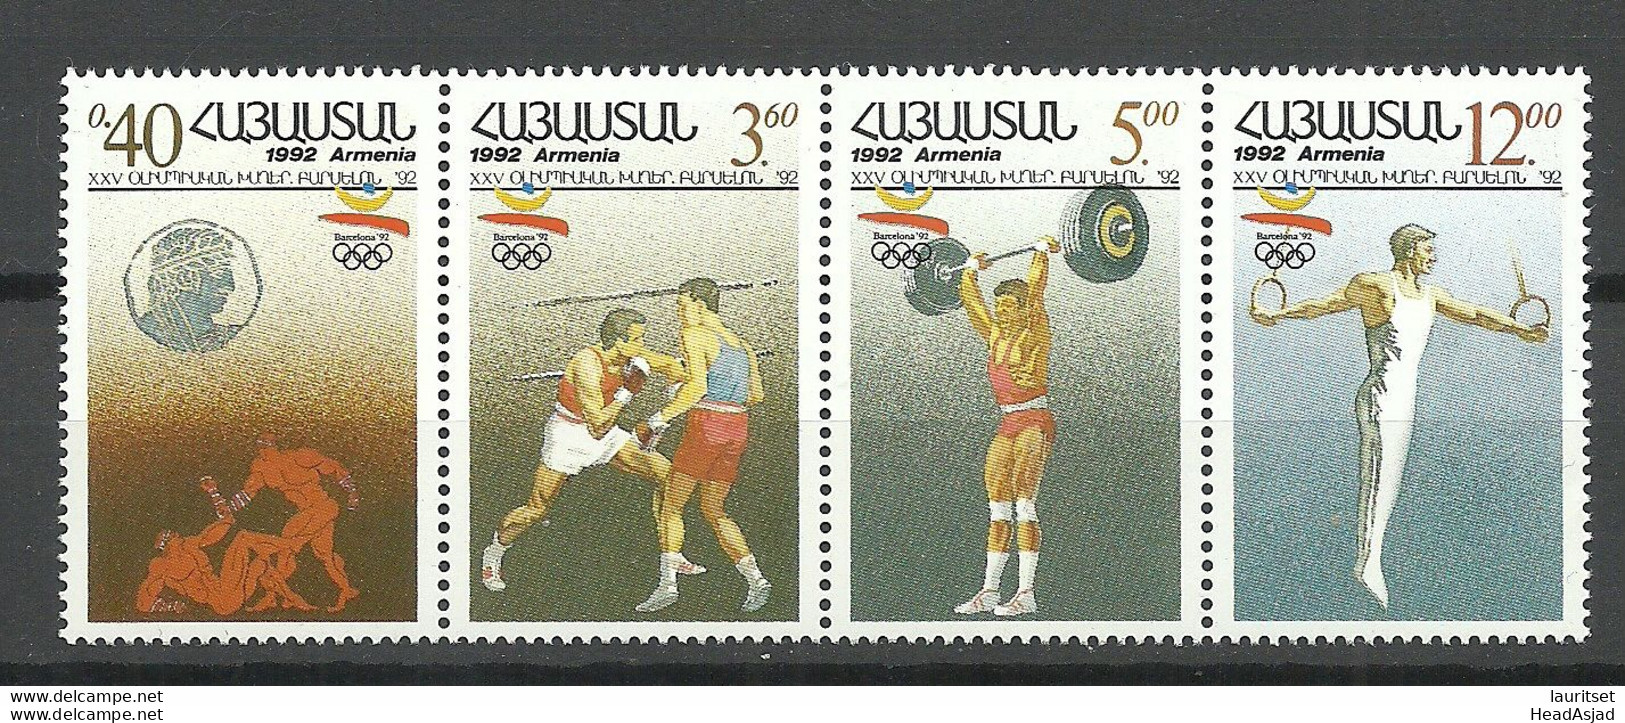 ARMENIEN Armenia 1992 Michel 199 - 202 MNH Olympic Games Barcelona - Summer 1992: Barcelona